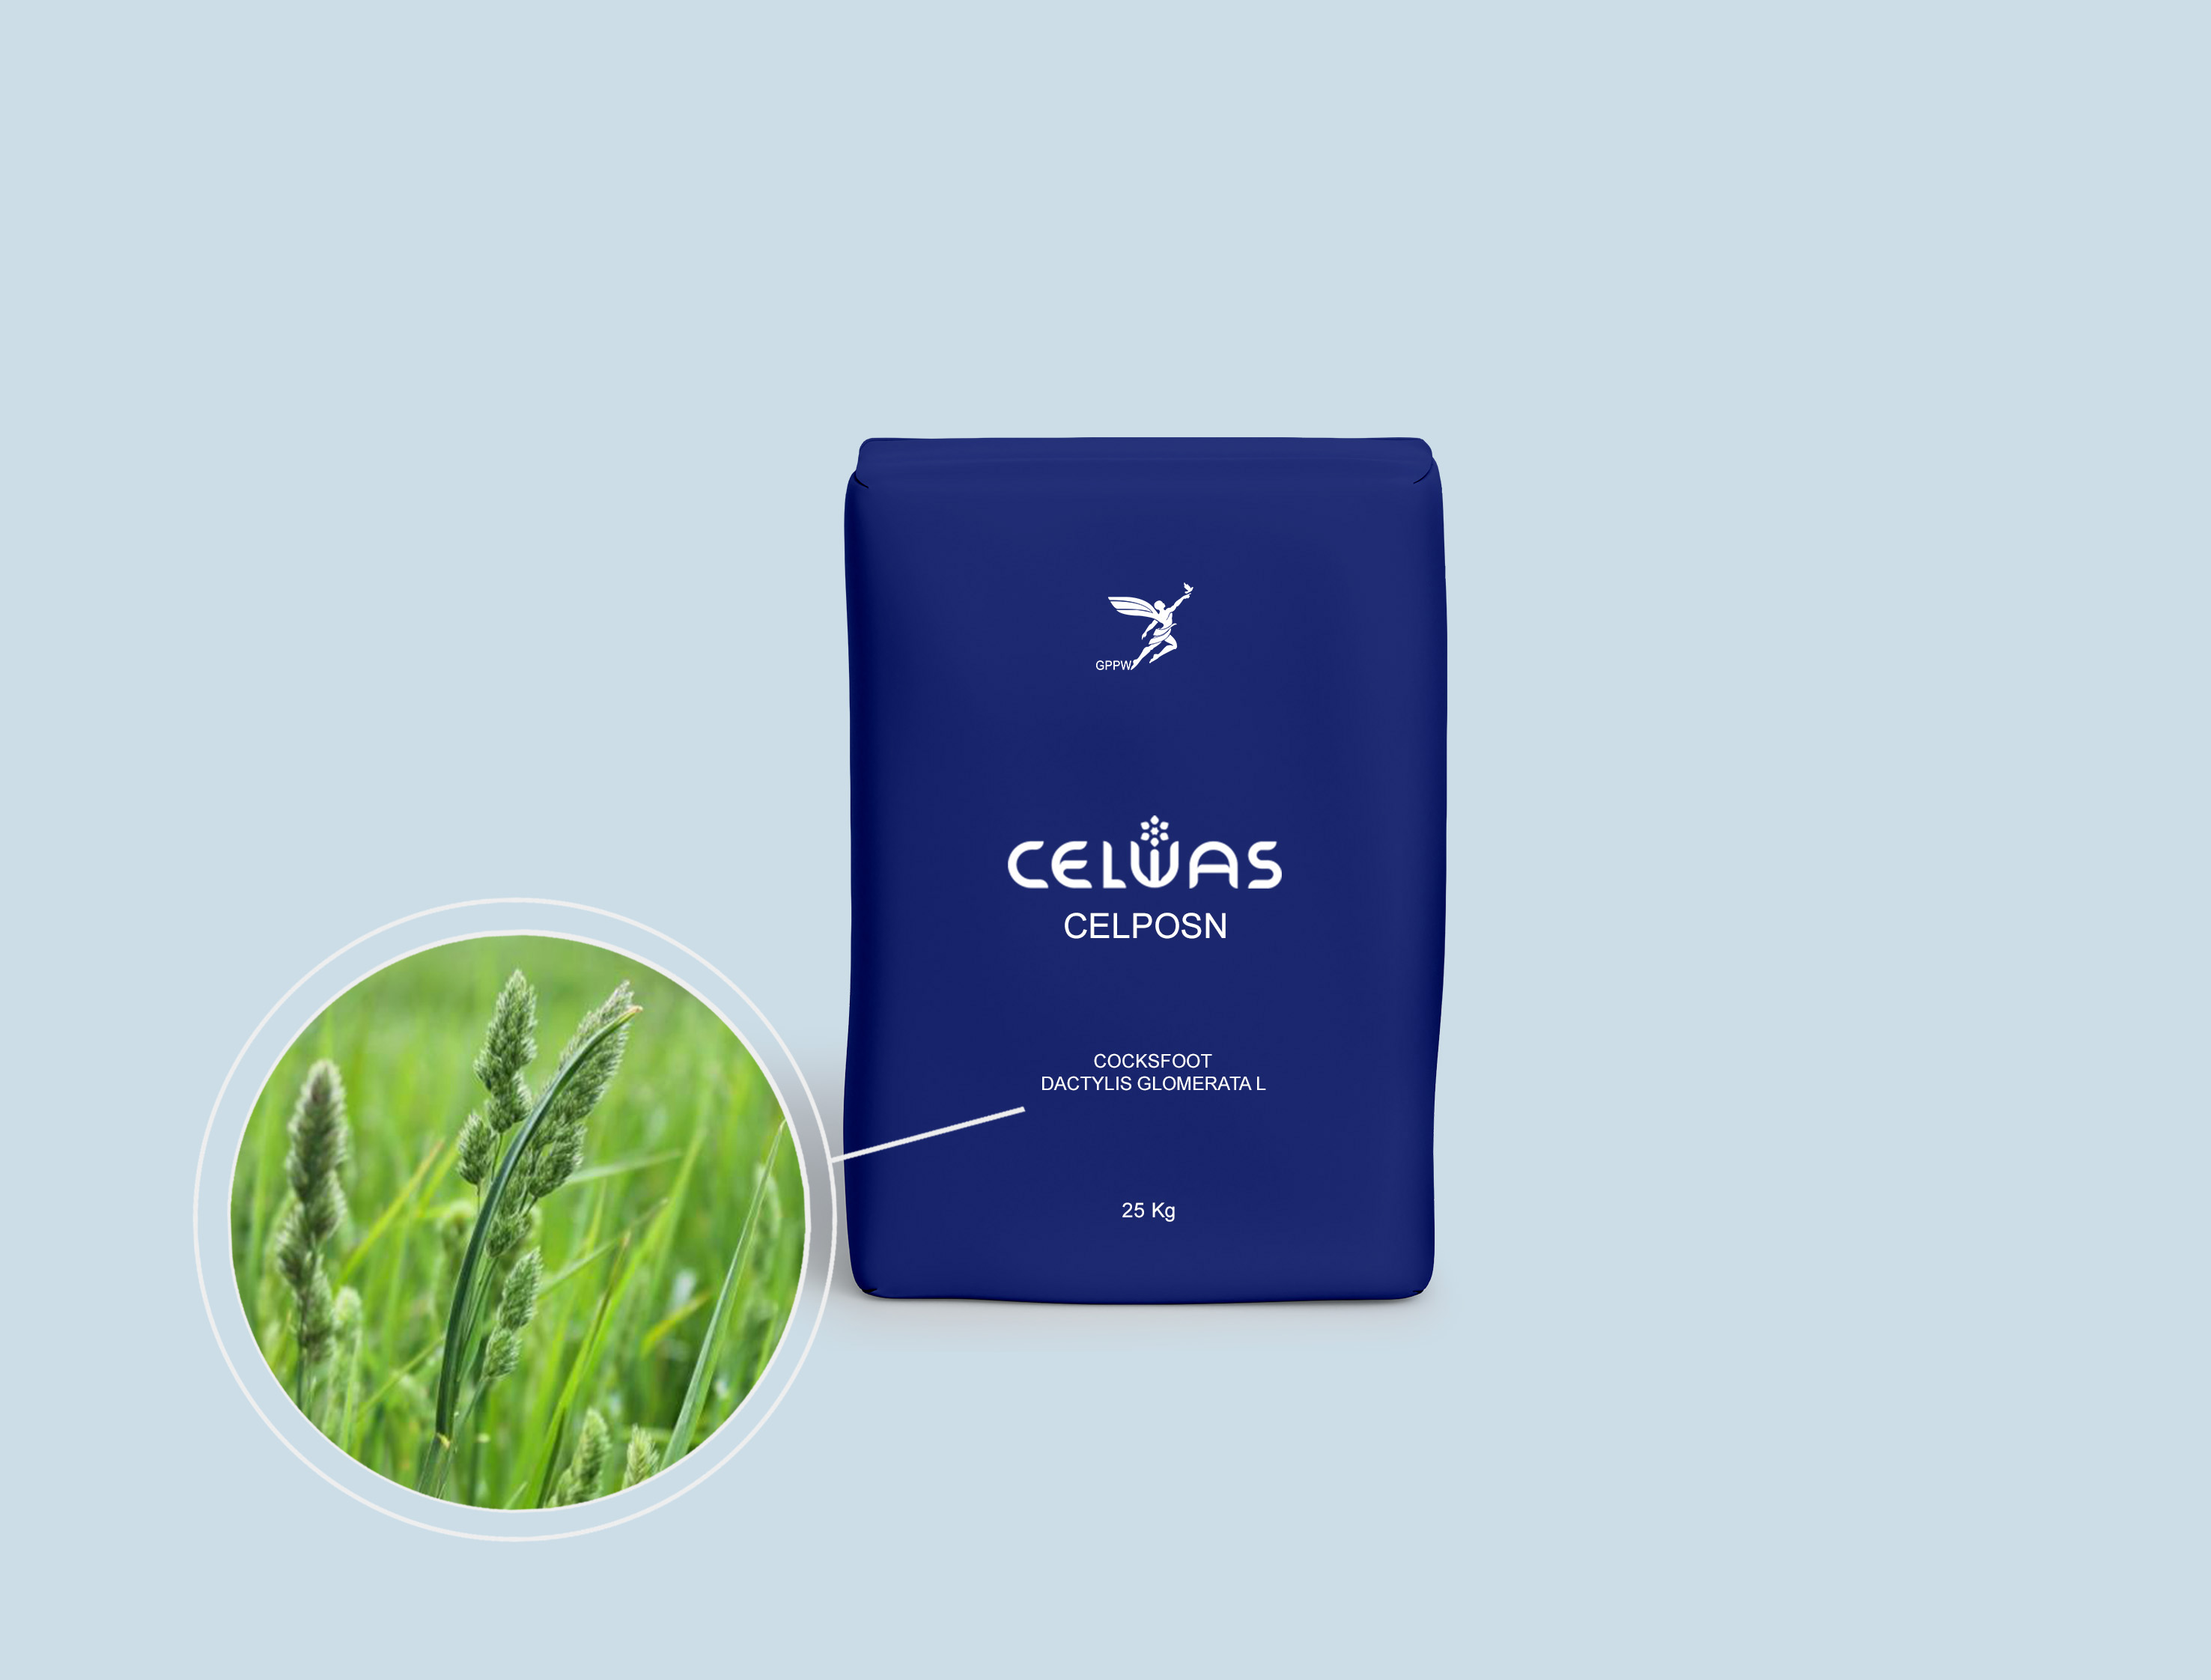 CELPOSN<br />fodder grasses and legumes